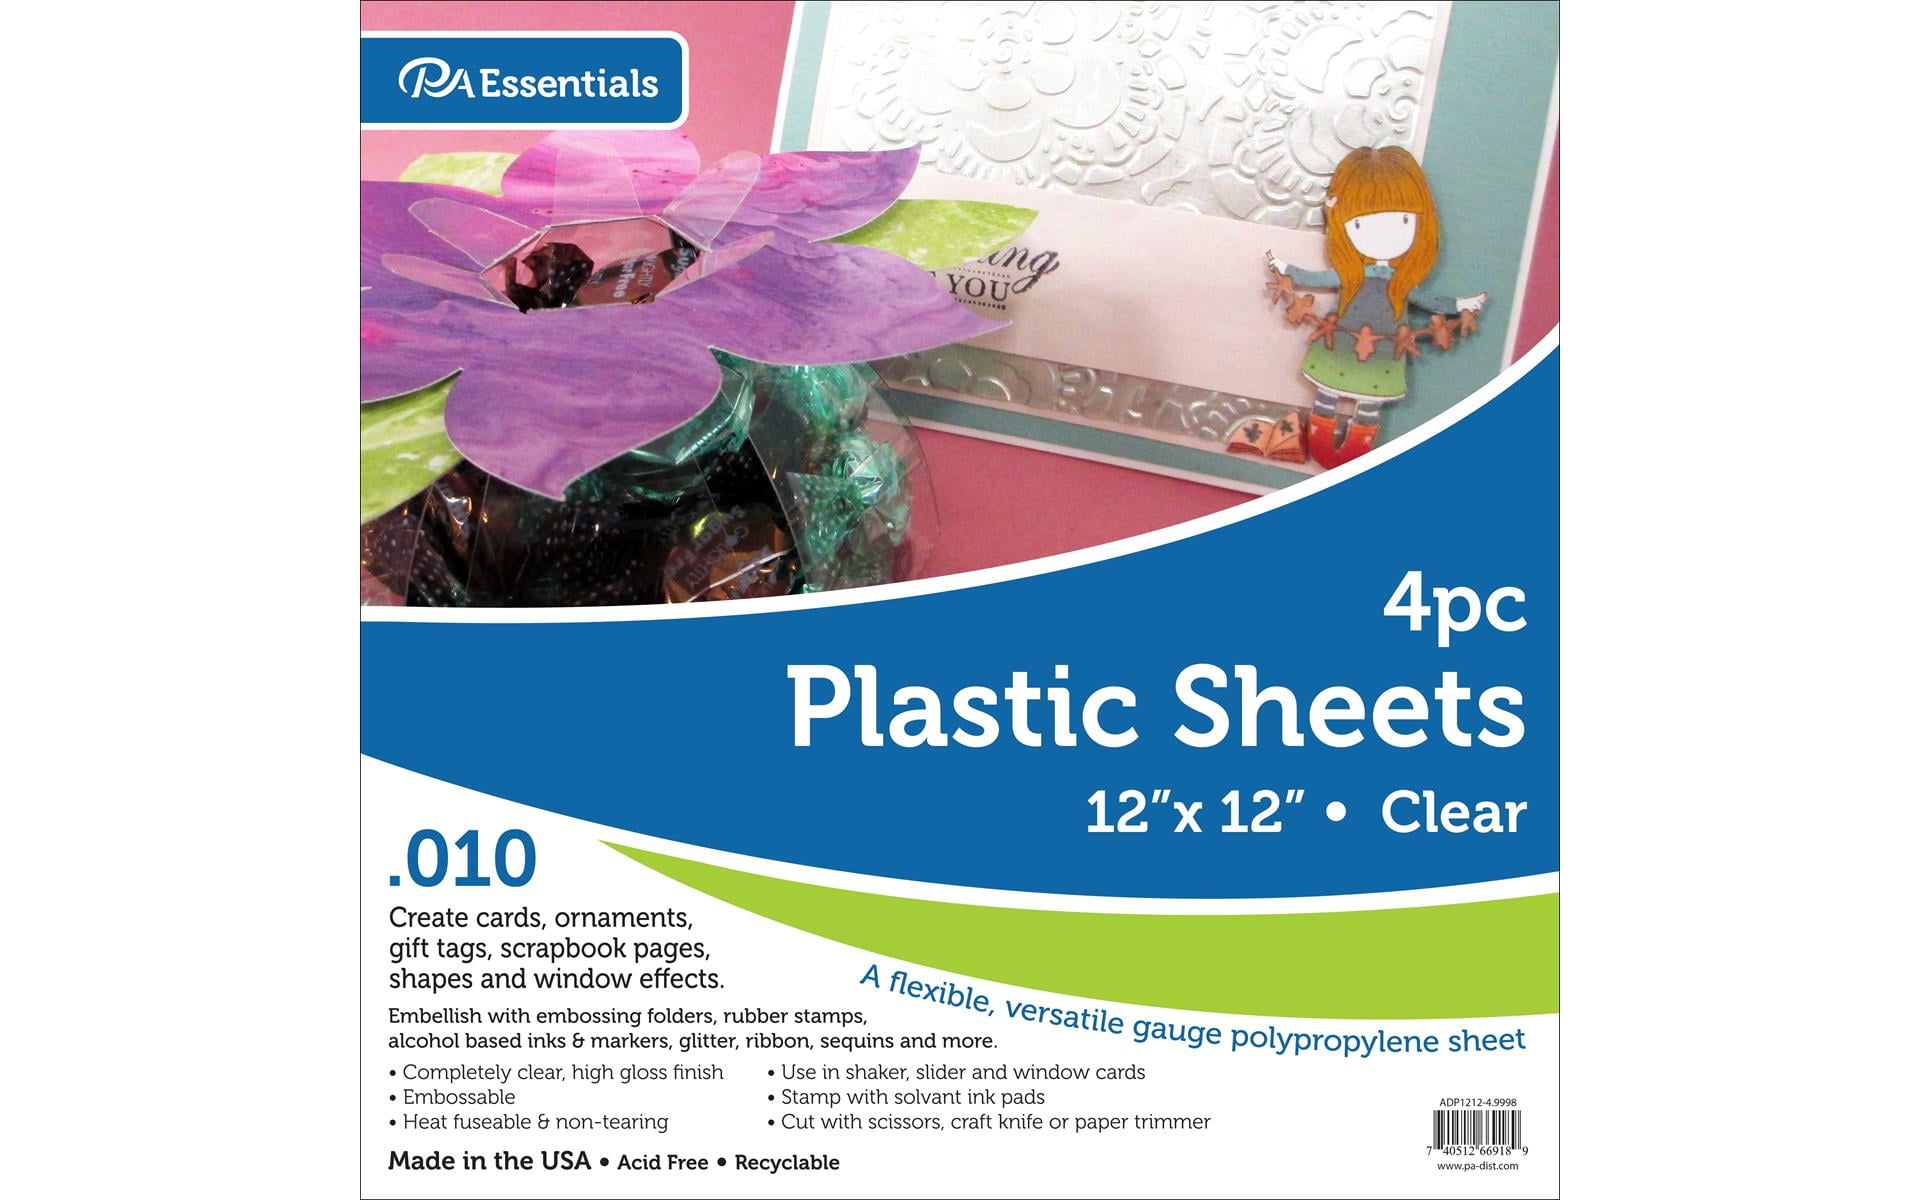 uxcell 0.1mm Thick A4 Size Clear PVC Sheet 297mm x 210mm Transparent Rigid  Plastic Sheet,Office,DIY Cutting,50pcs